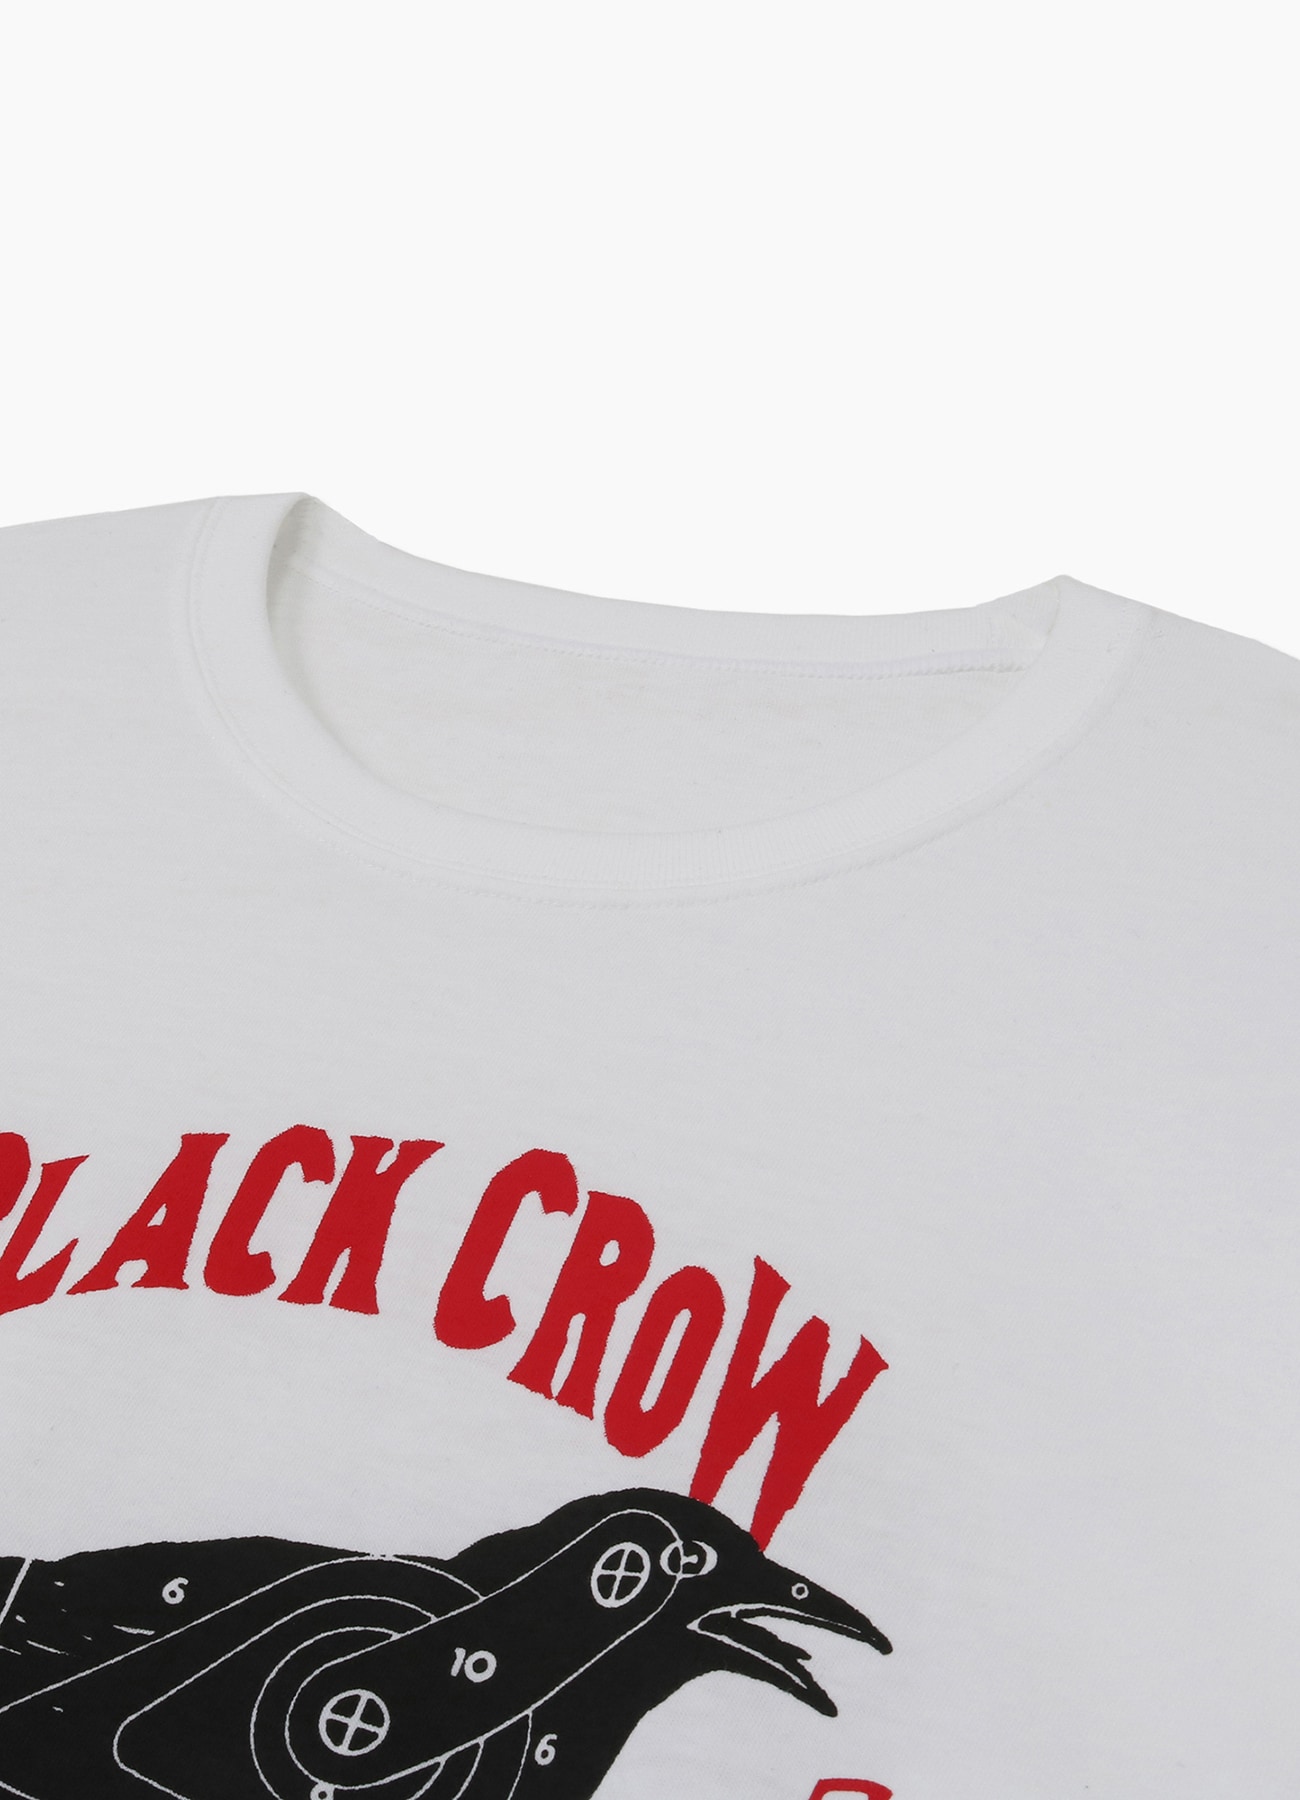 WILDSIDE Black Crow Hunting Long Sleeve T-shirt(M WHITE): YOHJI